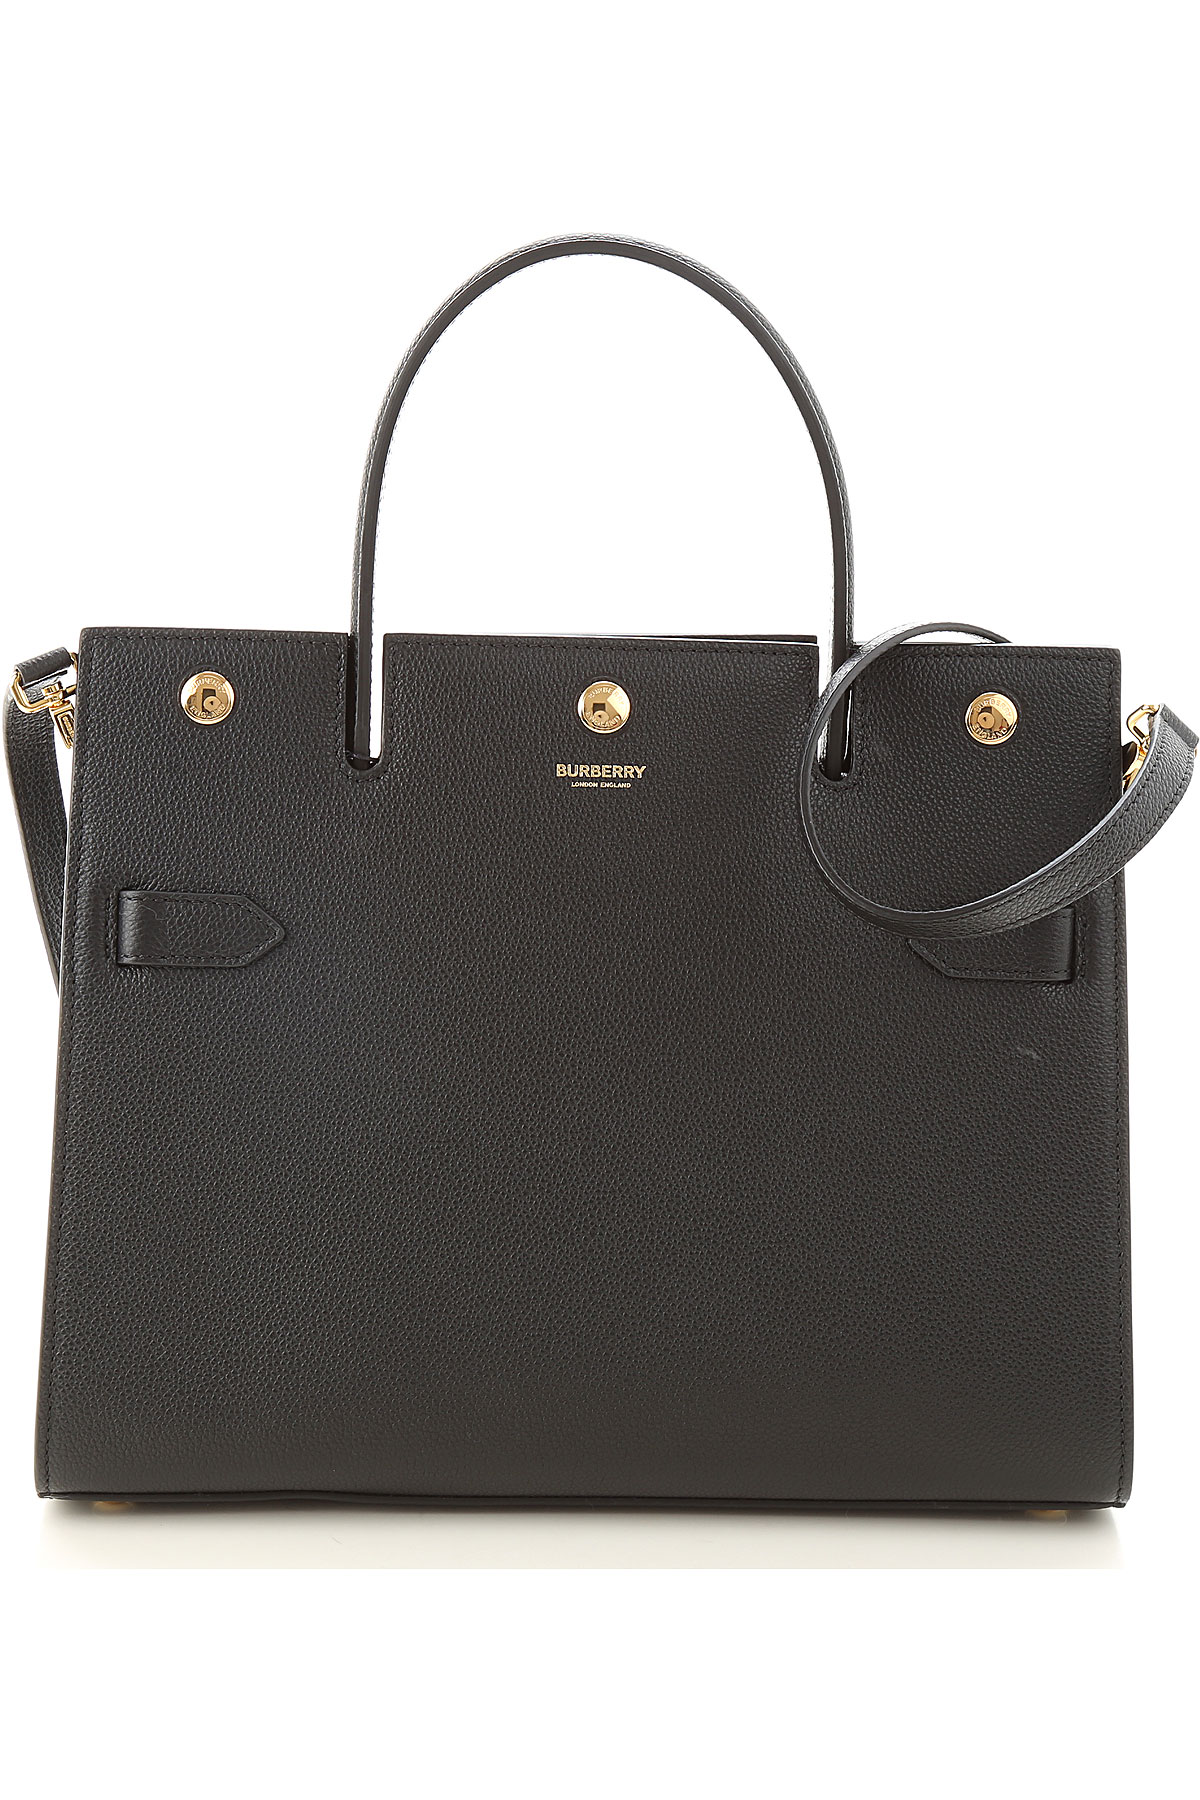 Handbags Burberry, Style code: 8016788-a1189-